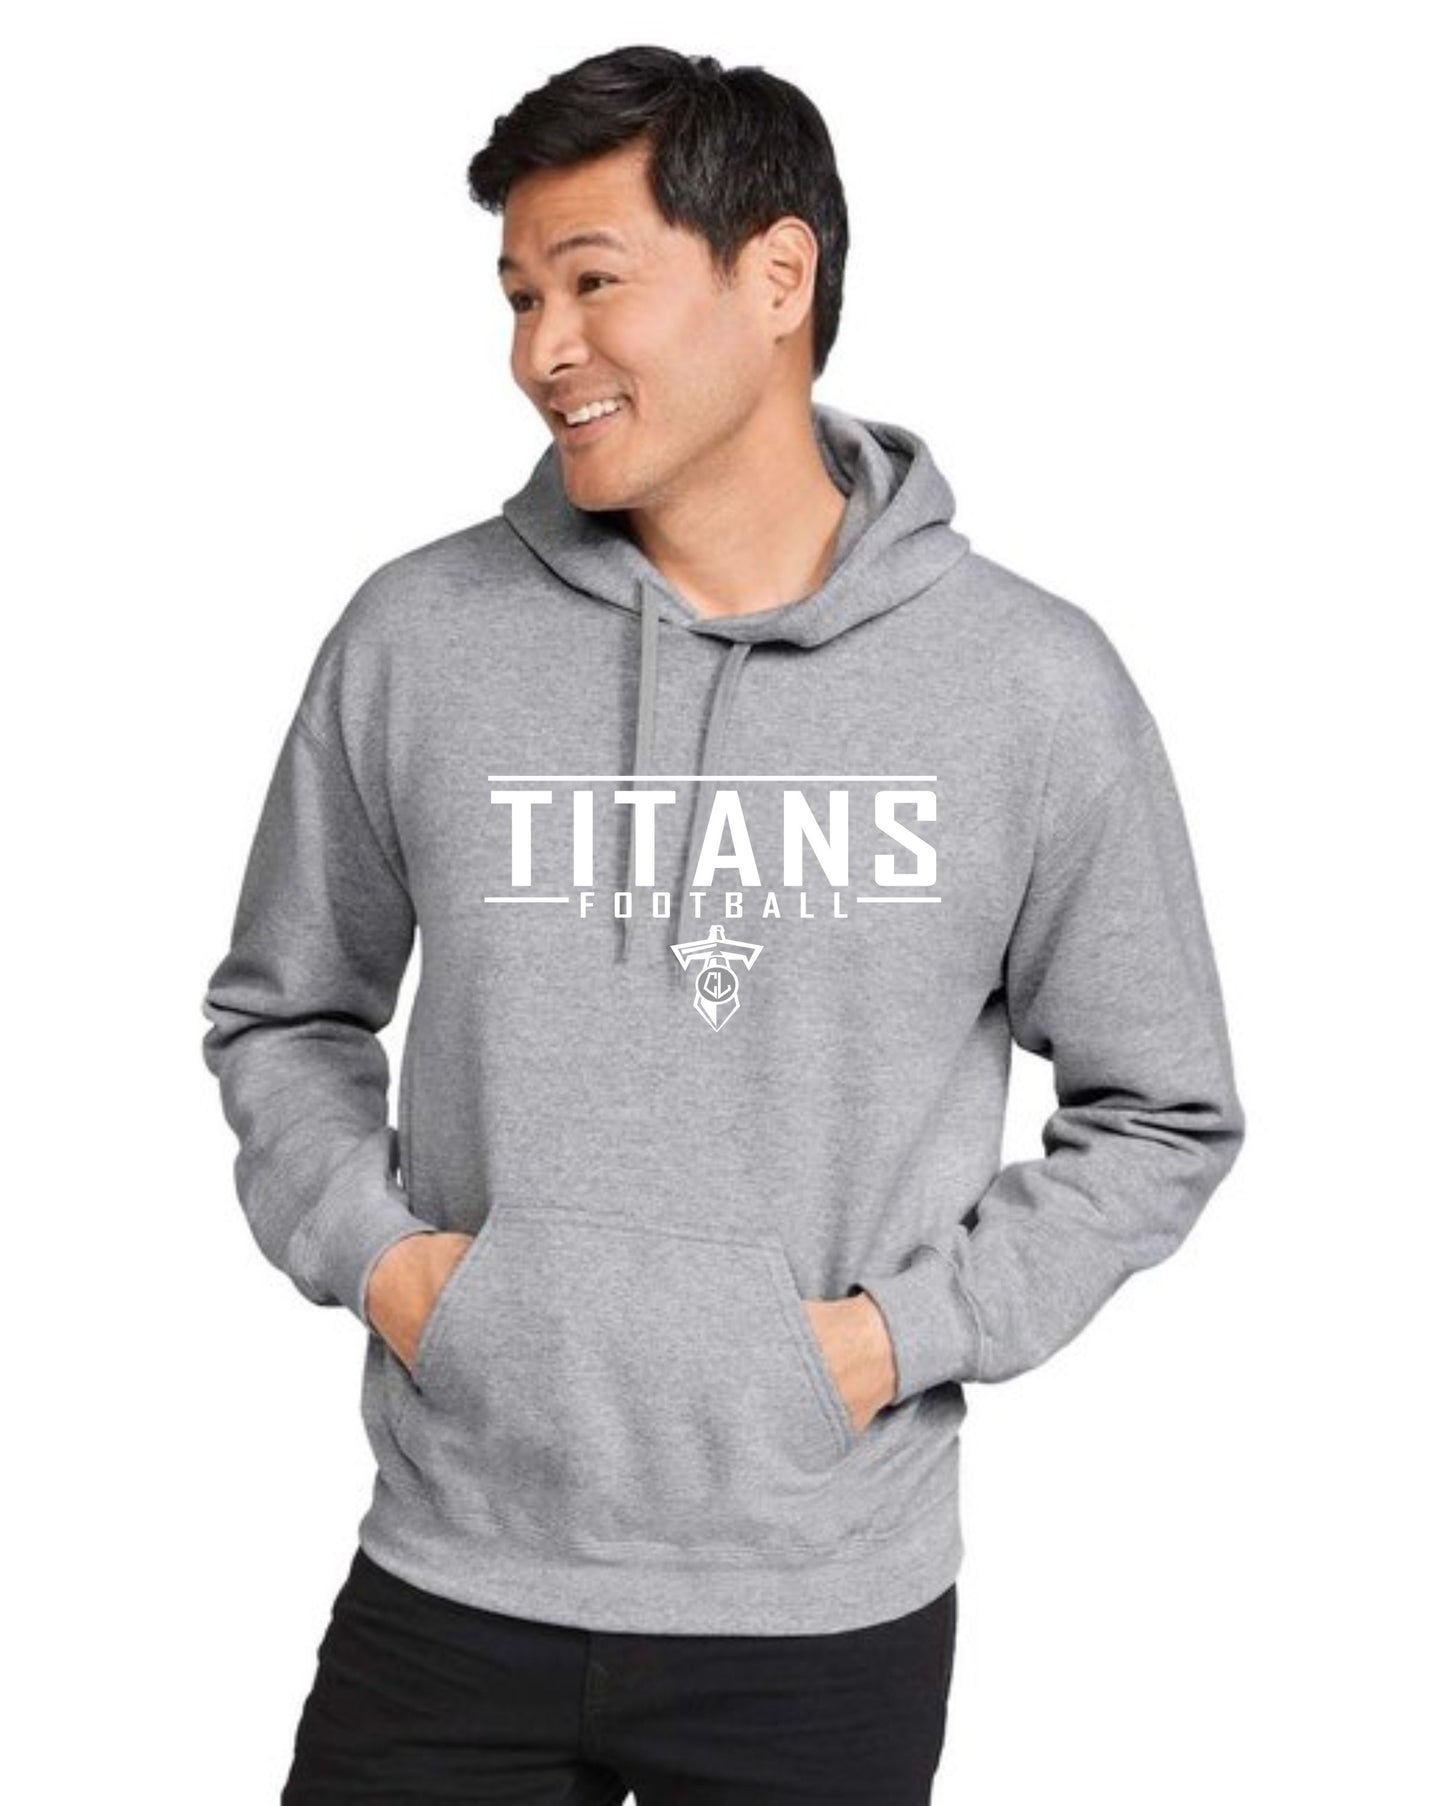 Titans Football - Outerwear